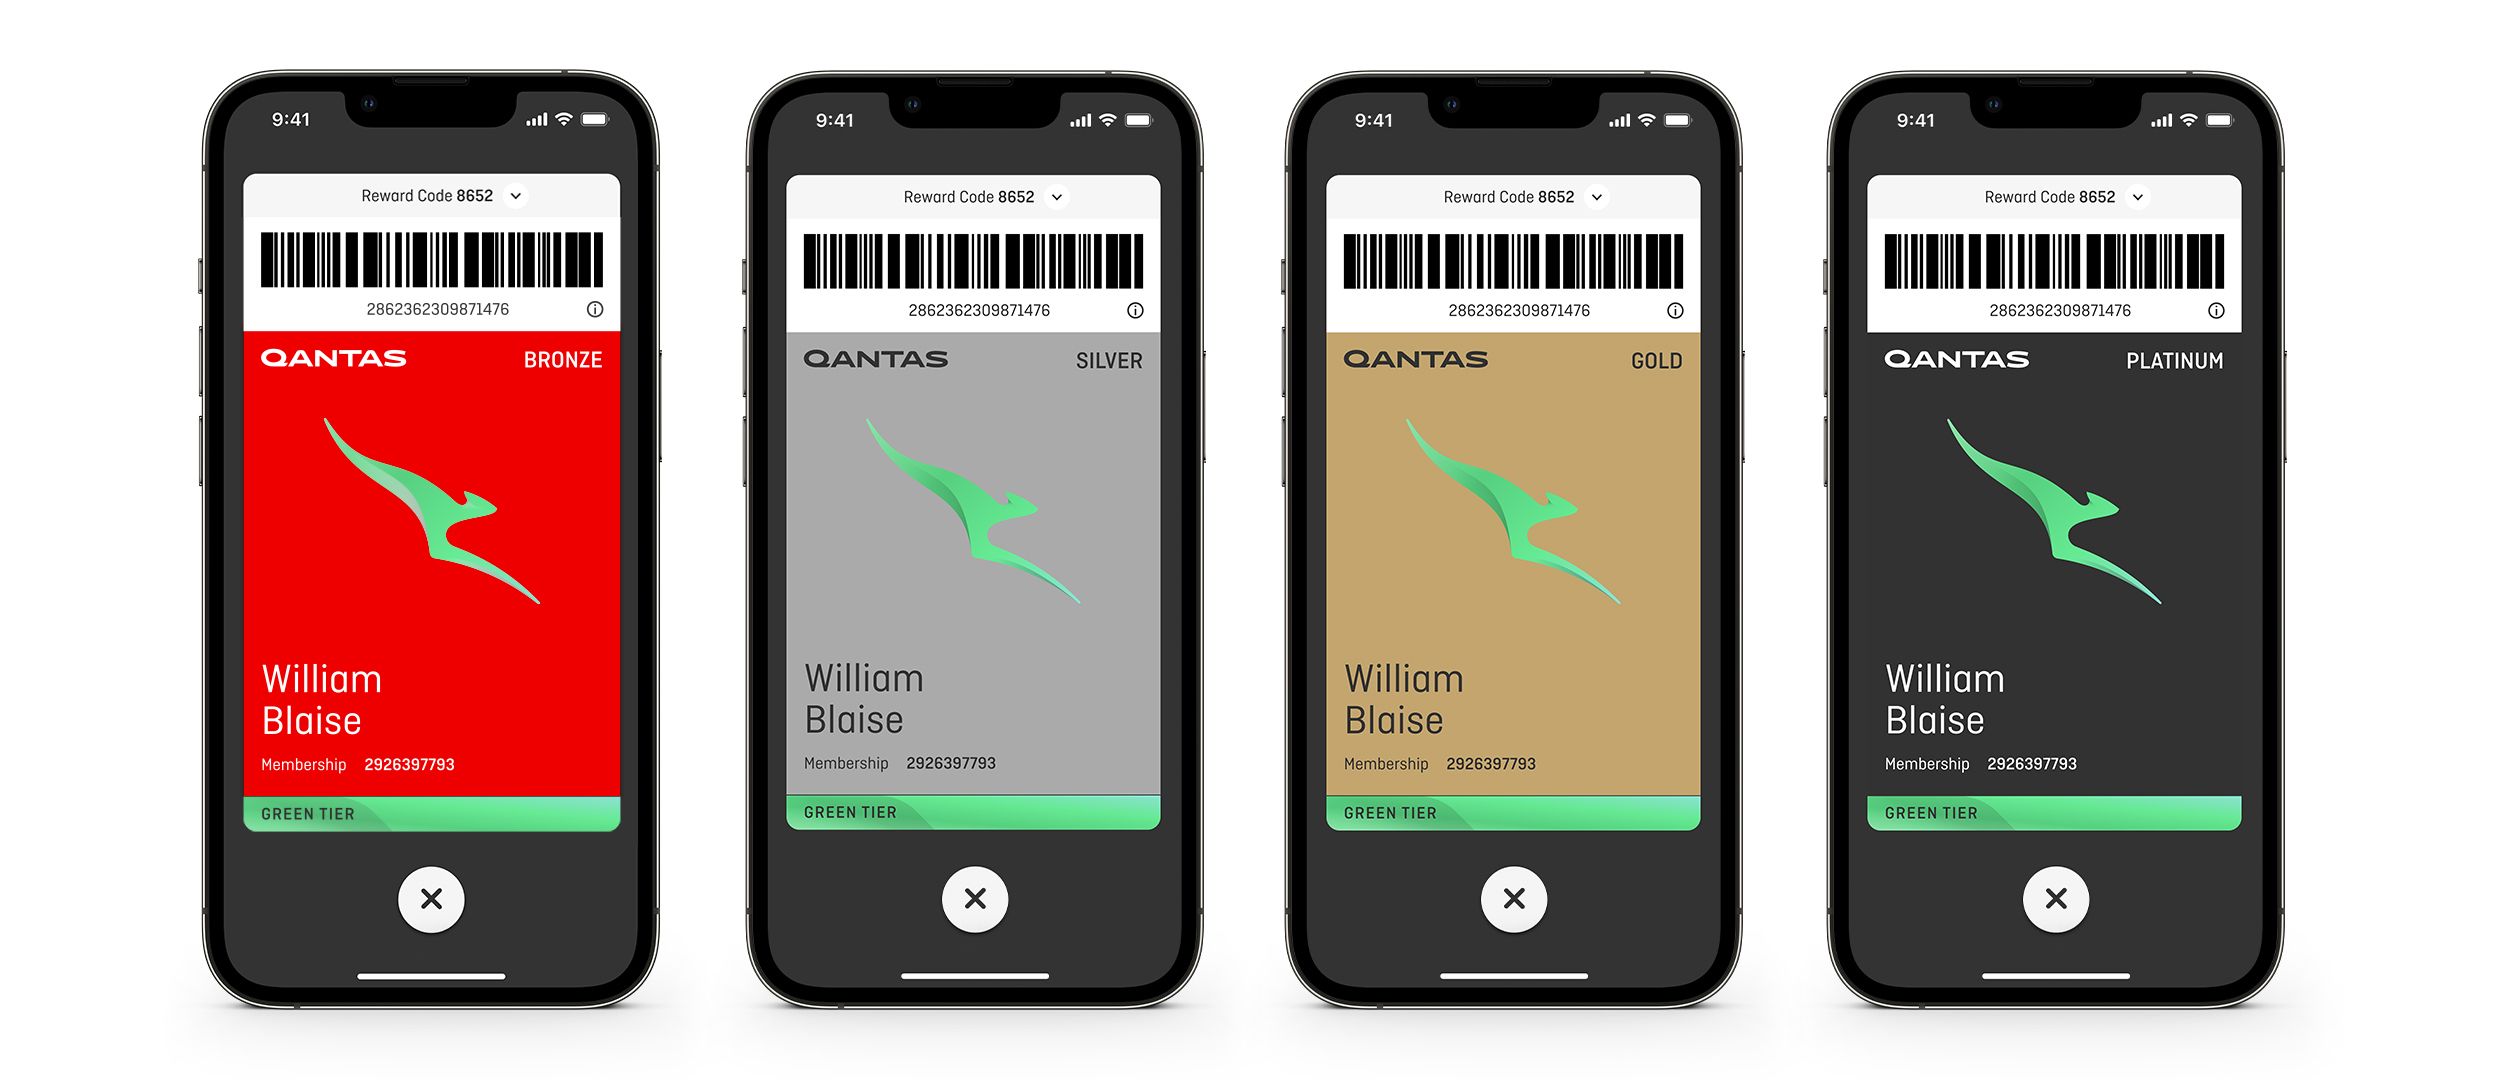 Qantas green tier digital membership cards shown on phones